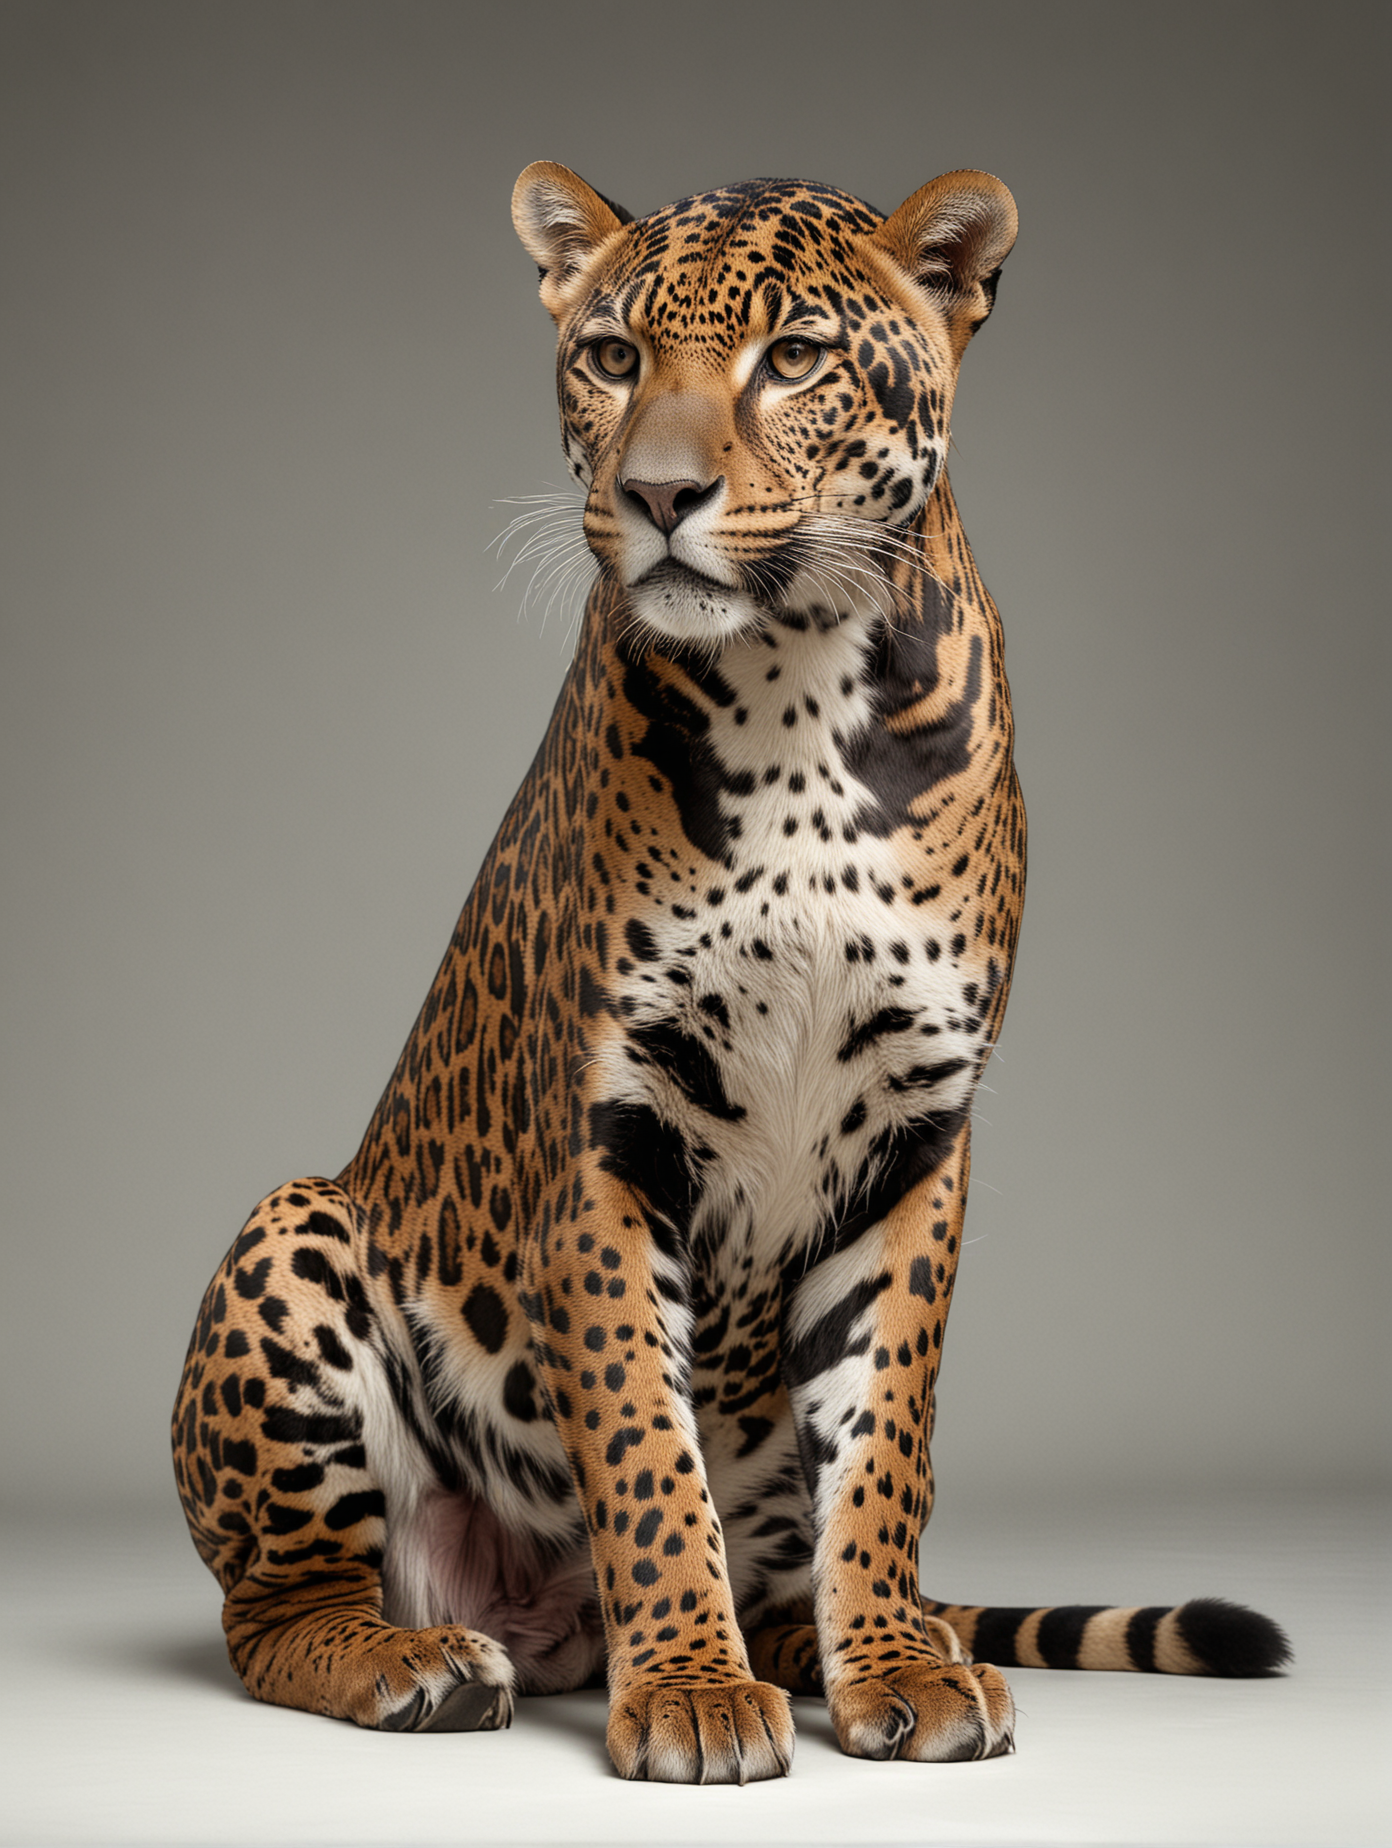 Majestic Jaguar Sitting in Studio Portrait